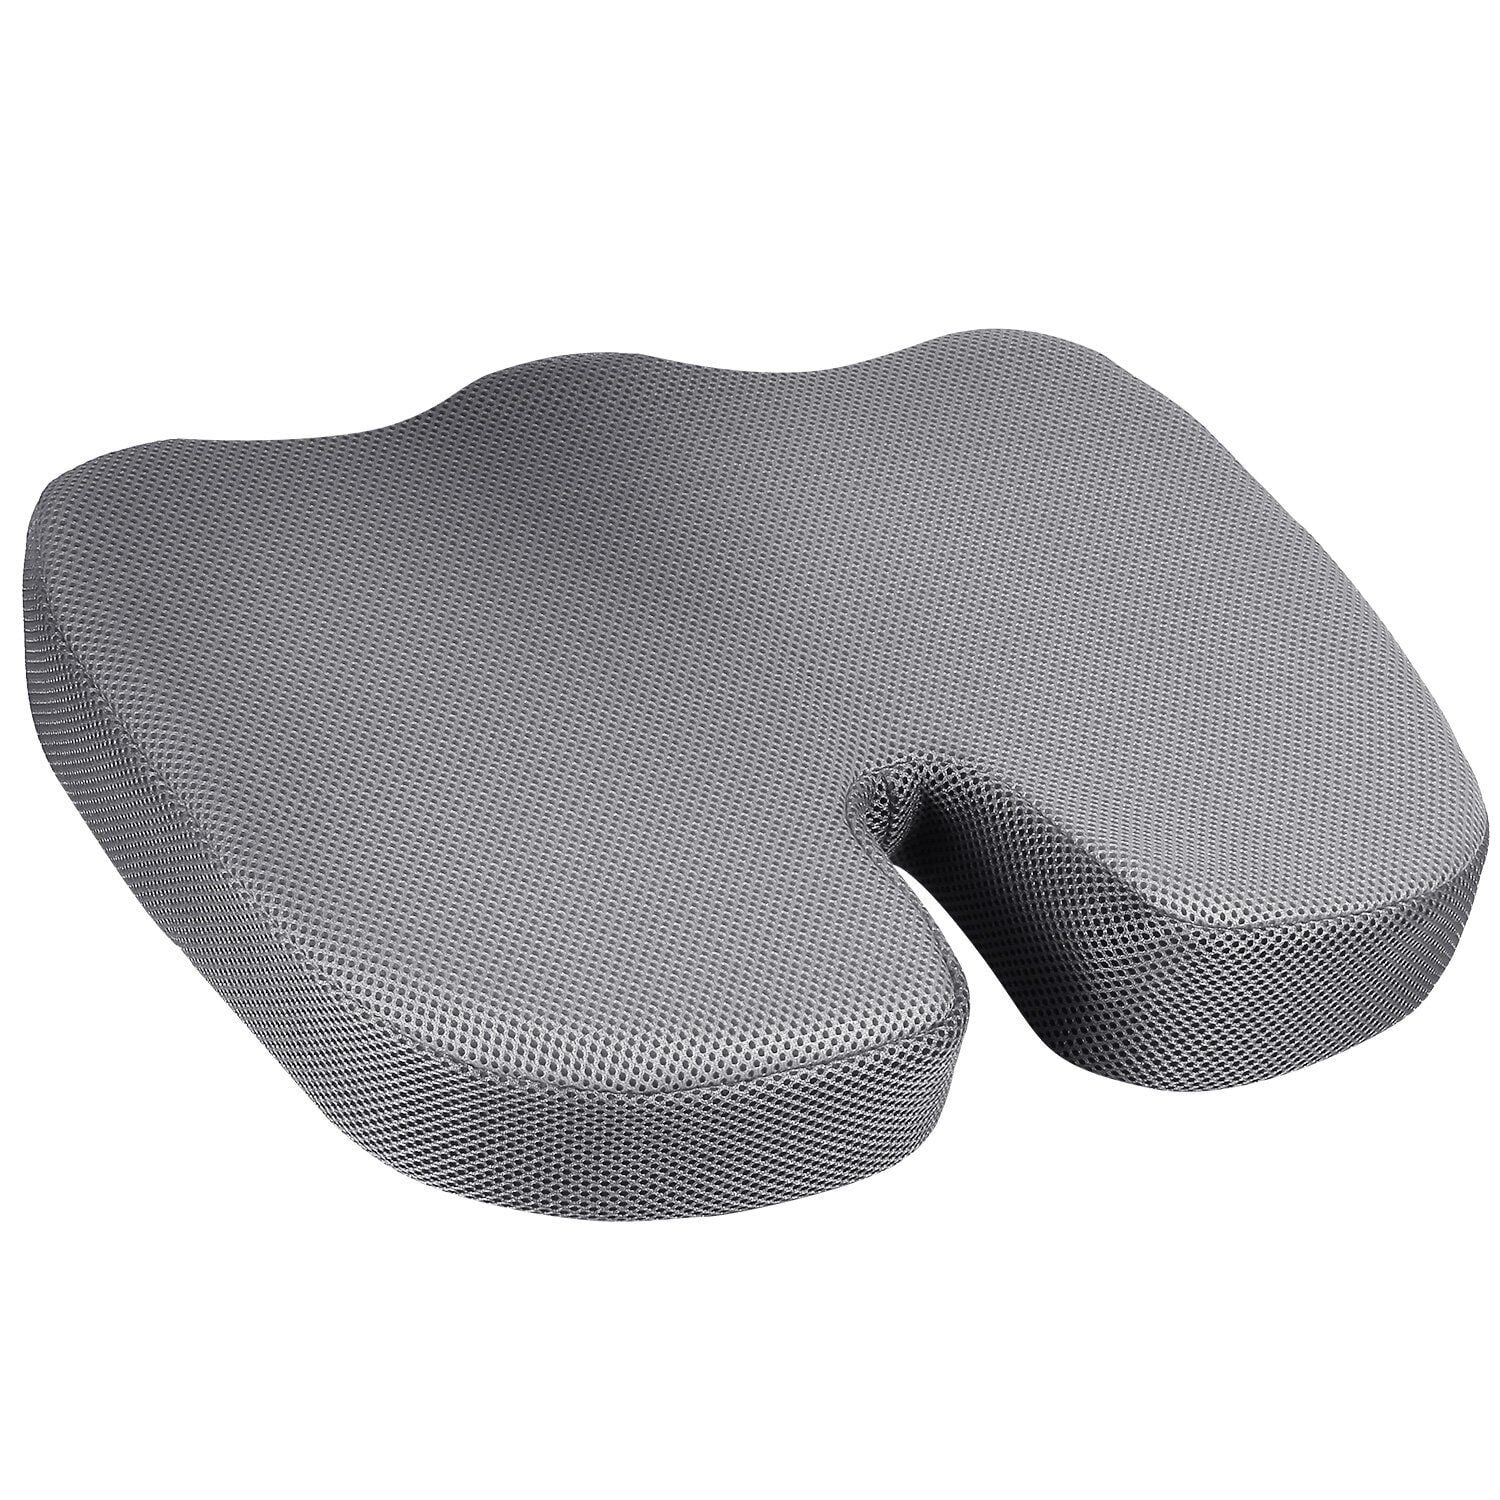 GSeat Ultra Orthopedic Gel and Foam Seat Cushion (Black) – for